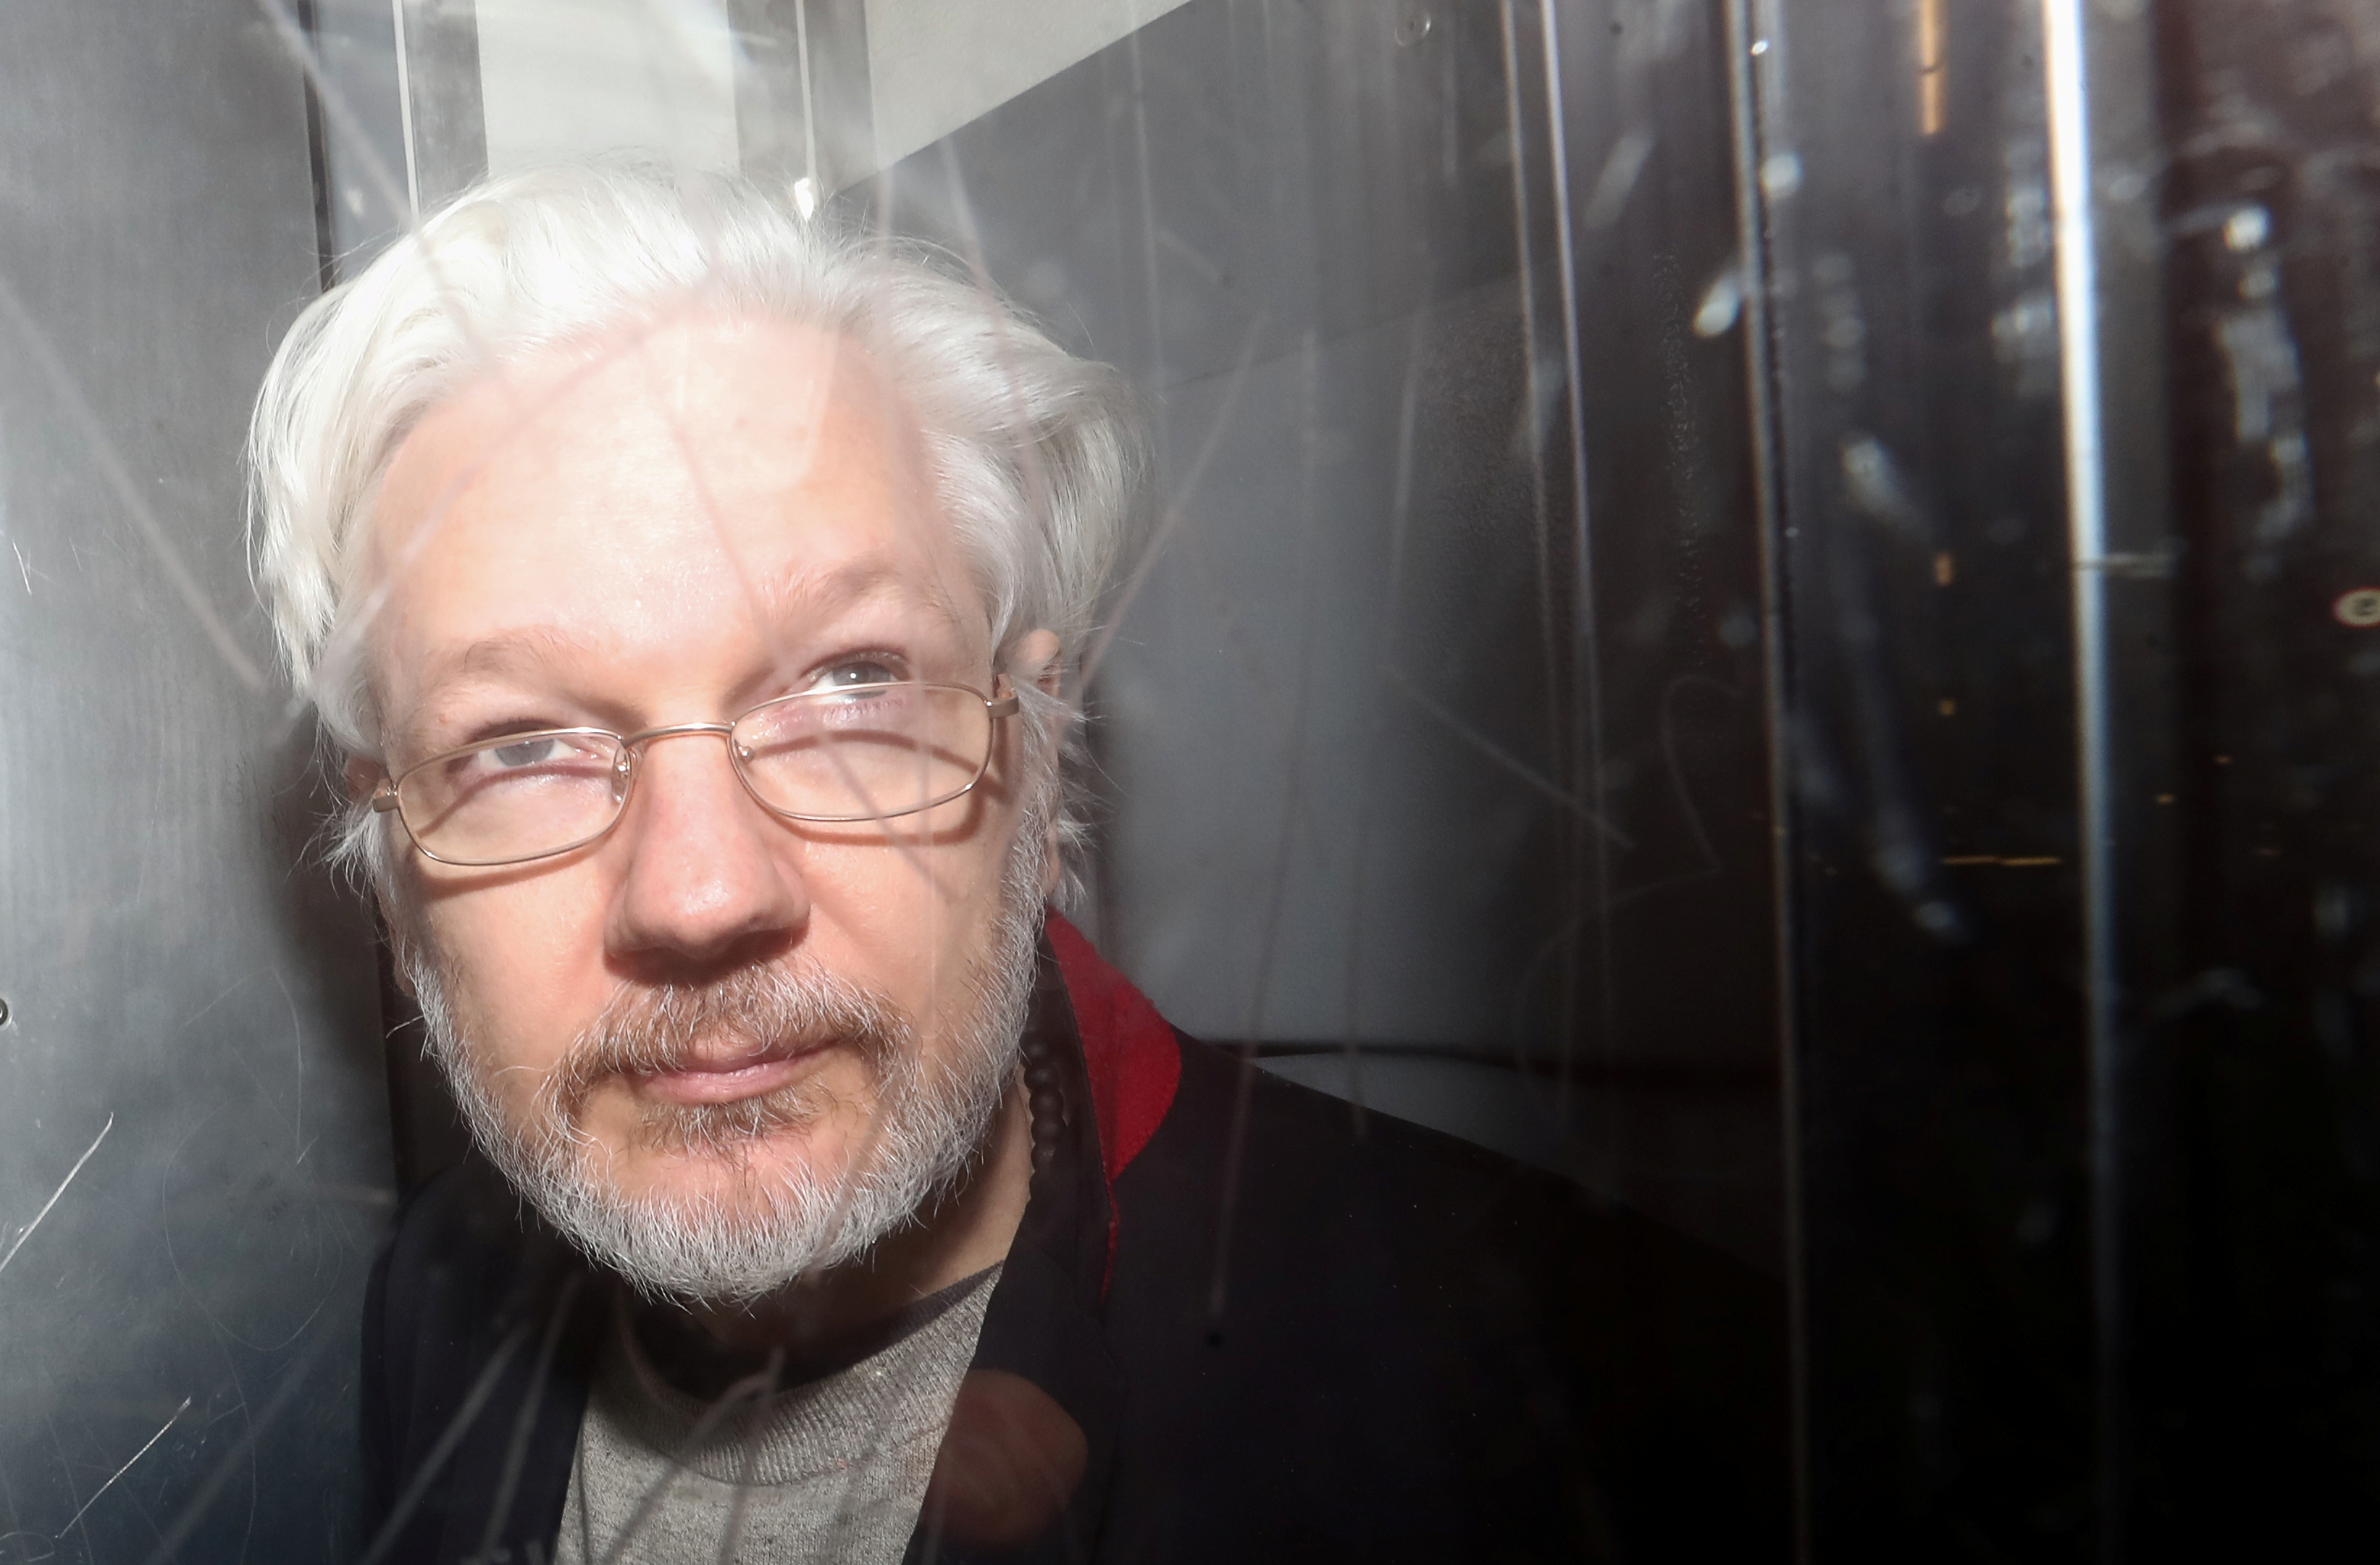 Julian Assange podrá contraer matrimonio en la cárcel, según su pareja